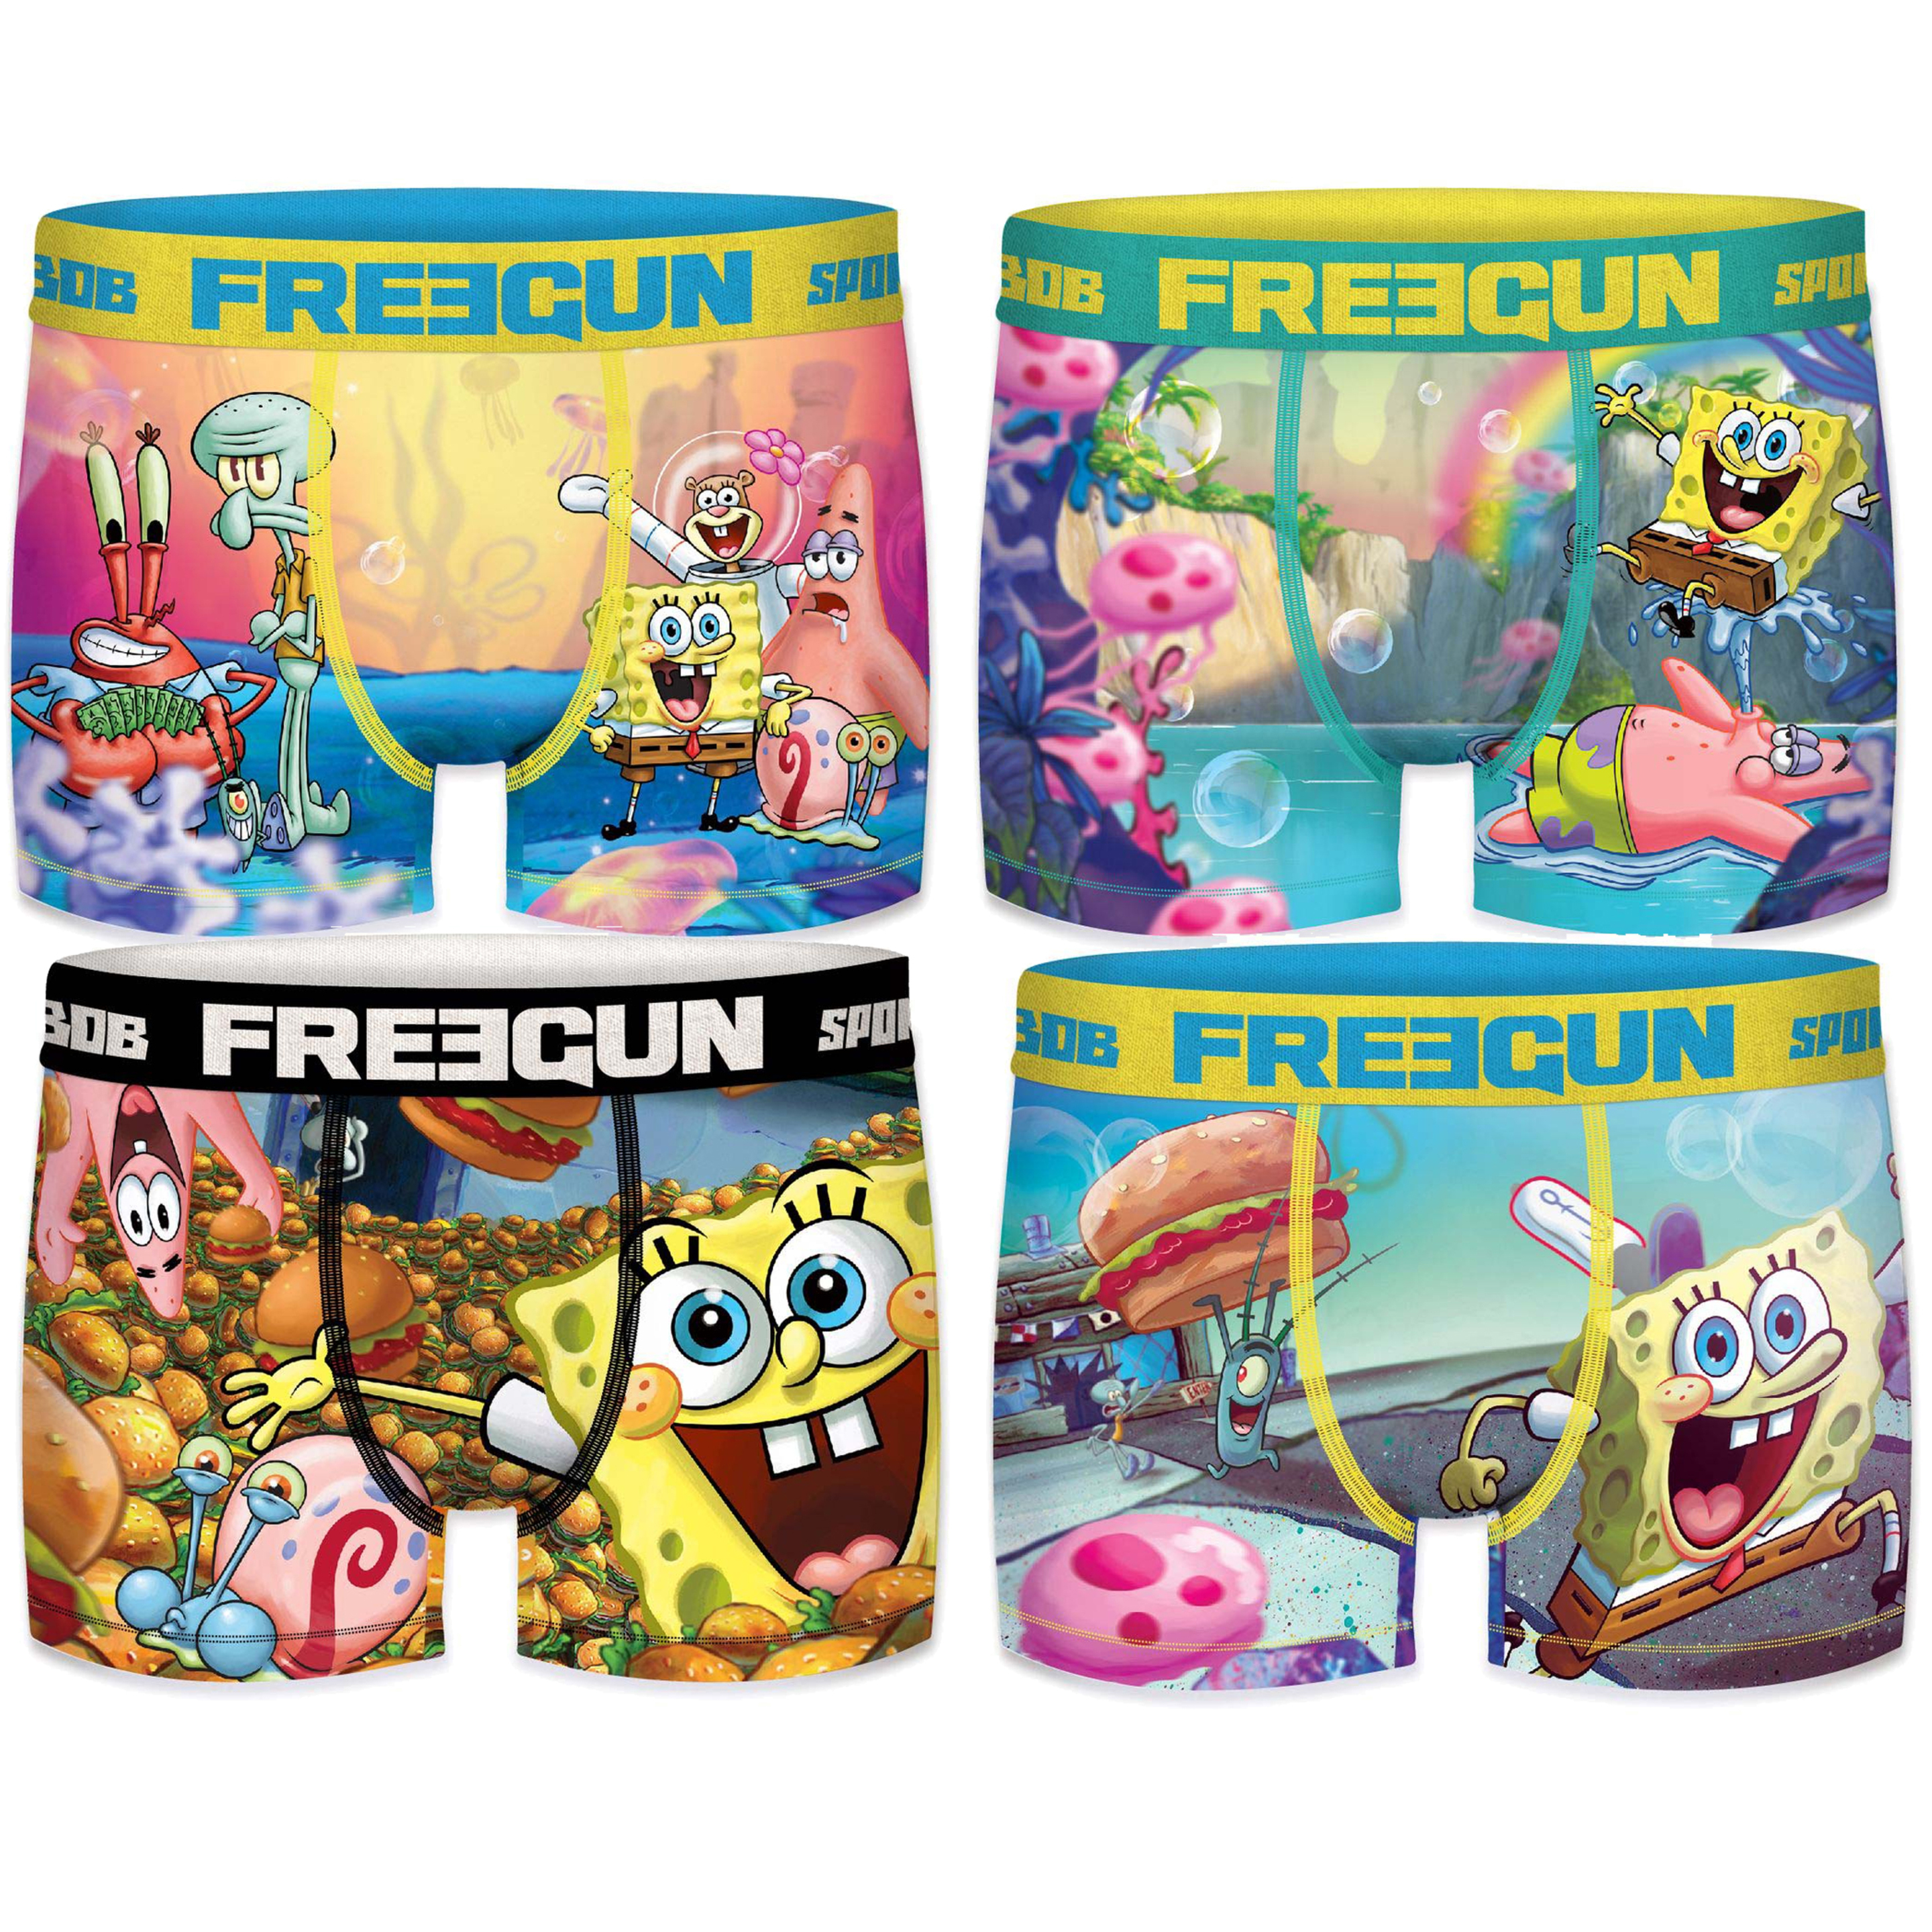 Cuecas Freegun Spongebob Pack 3